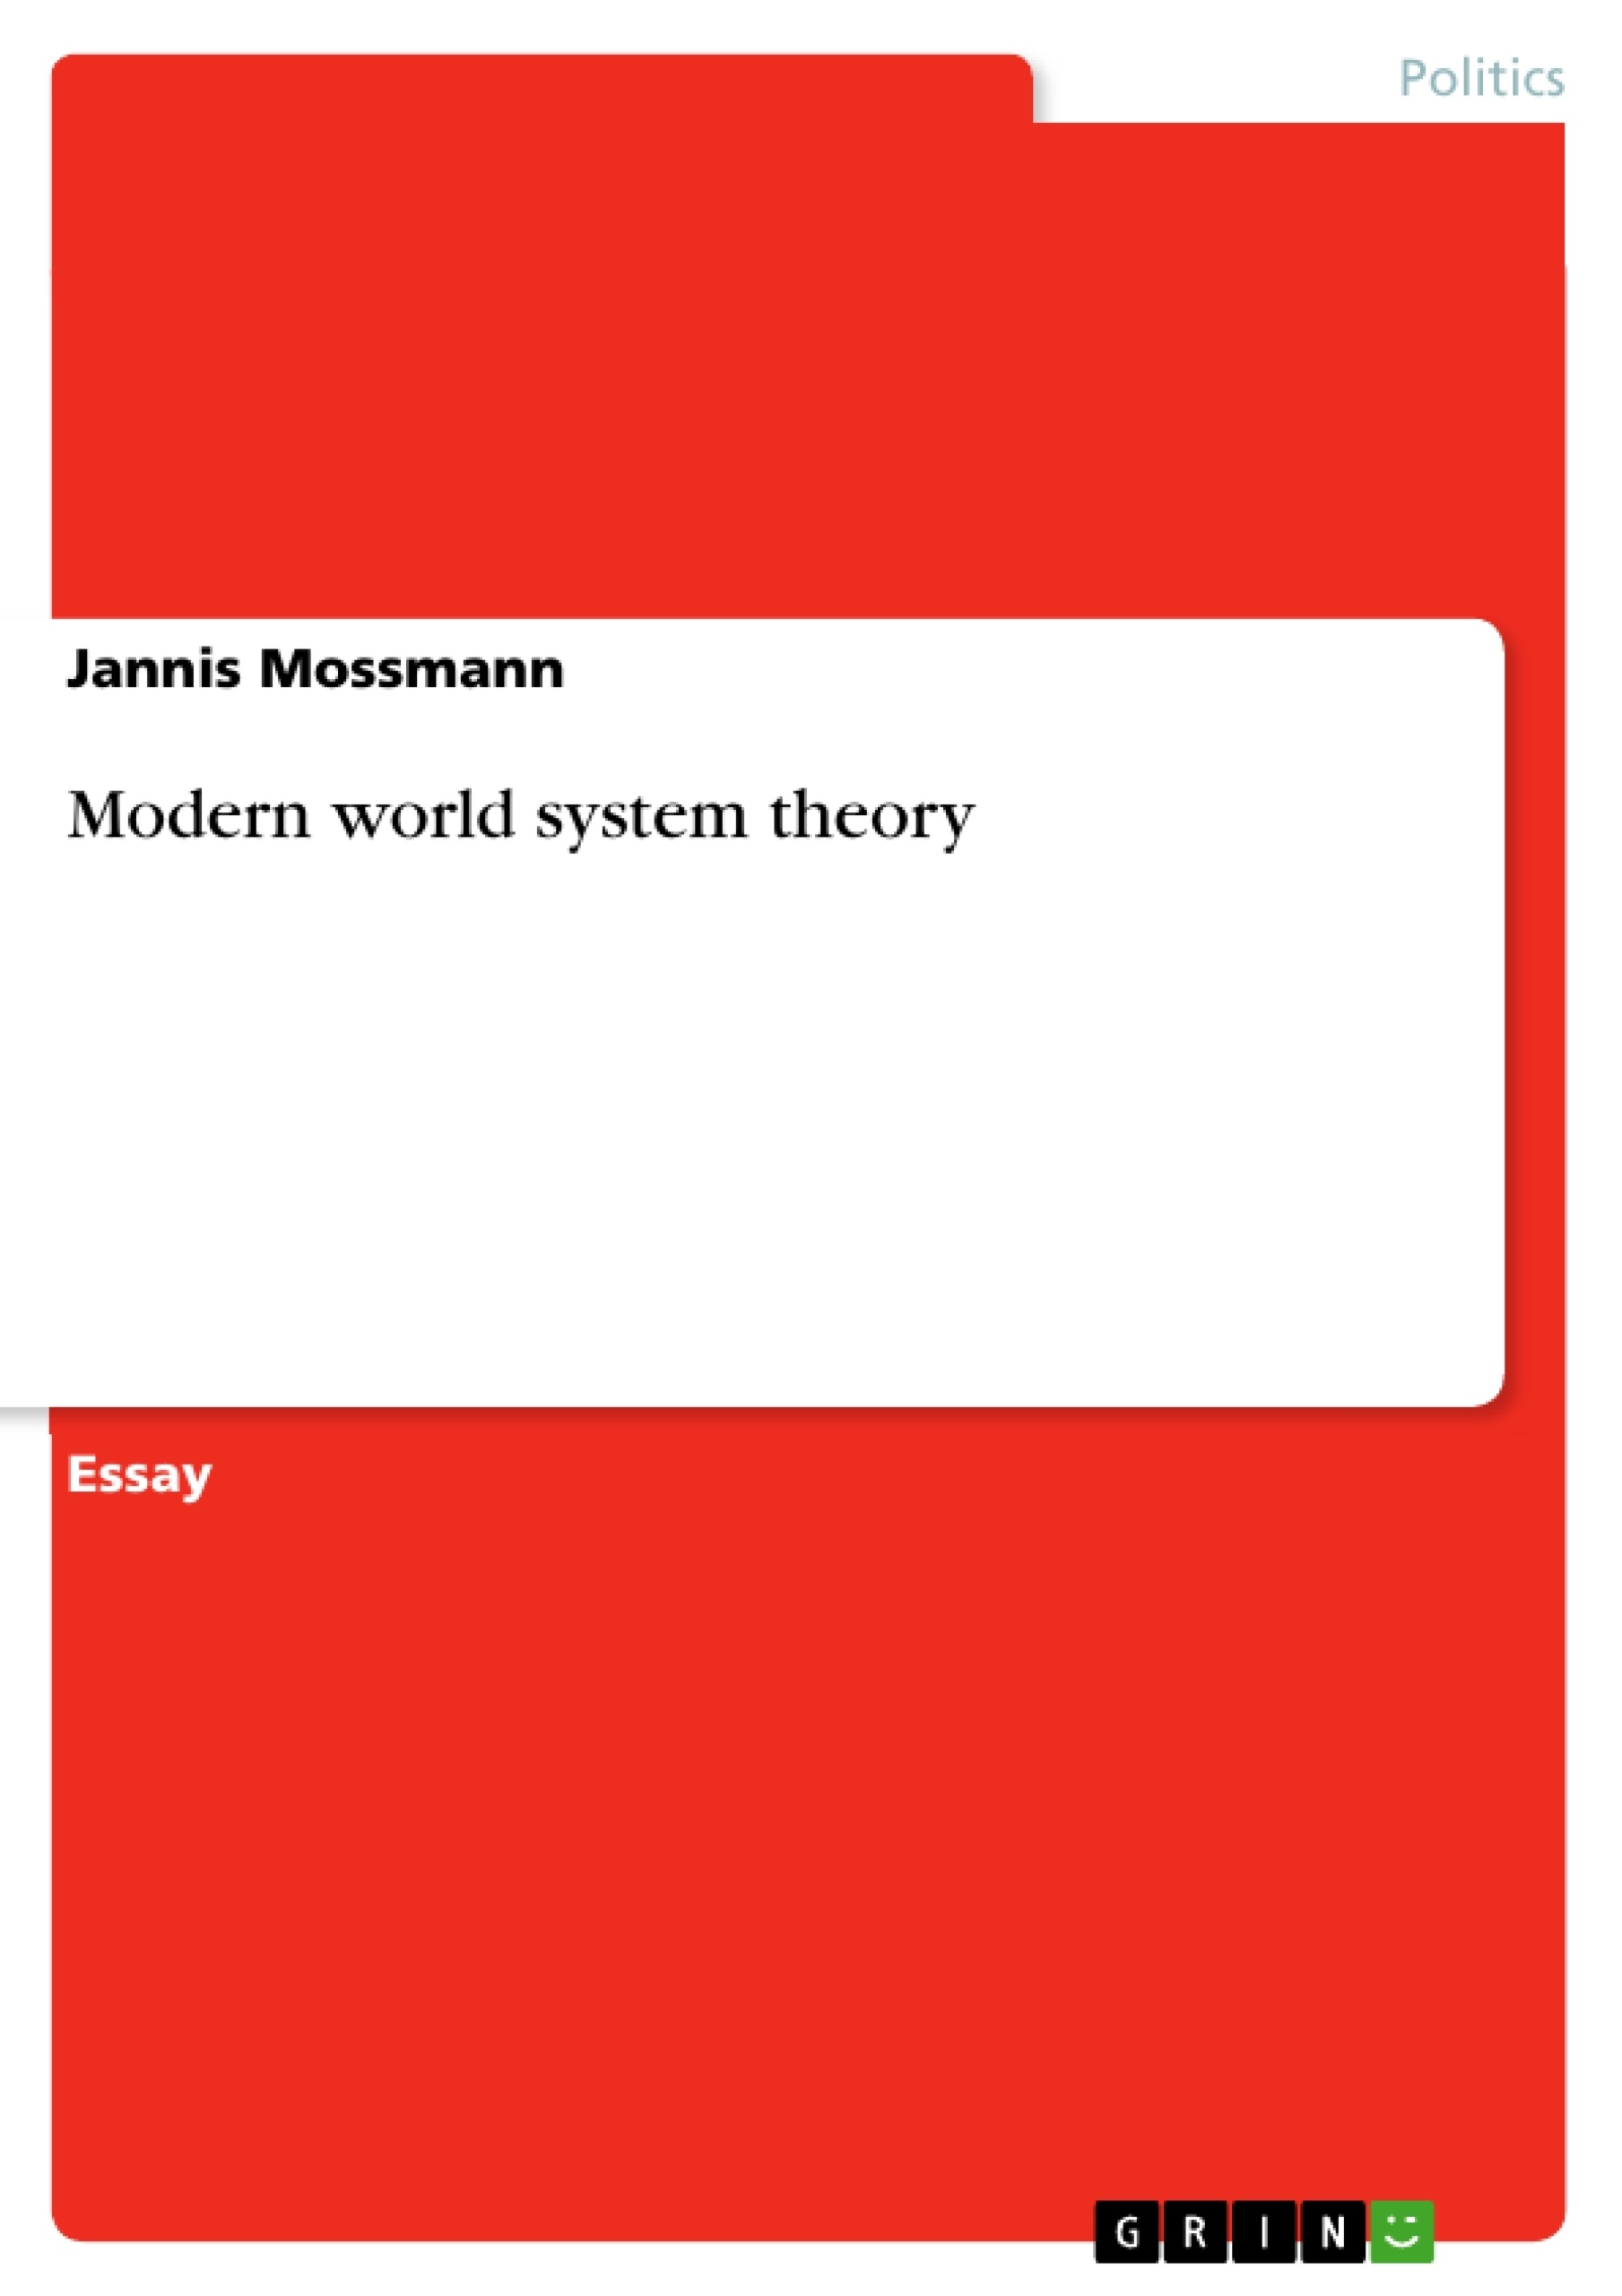 Title: Modern world system theory